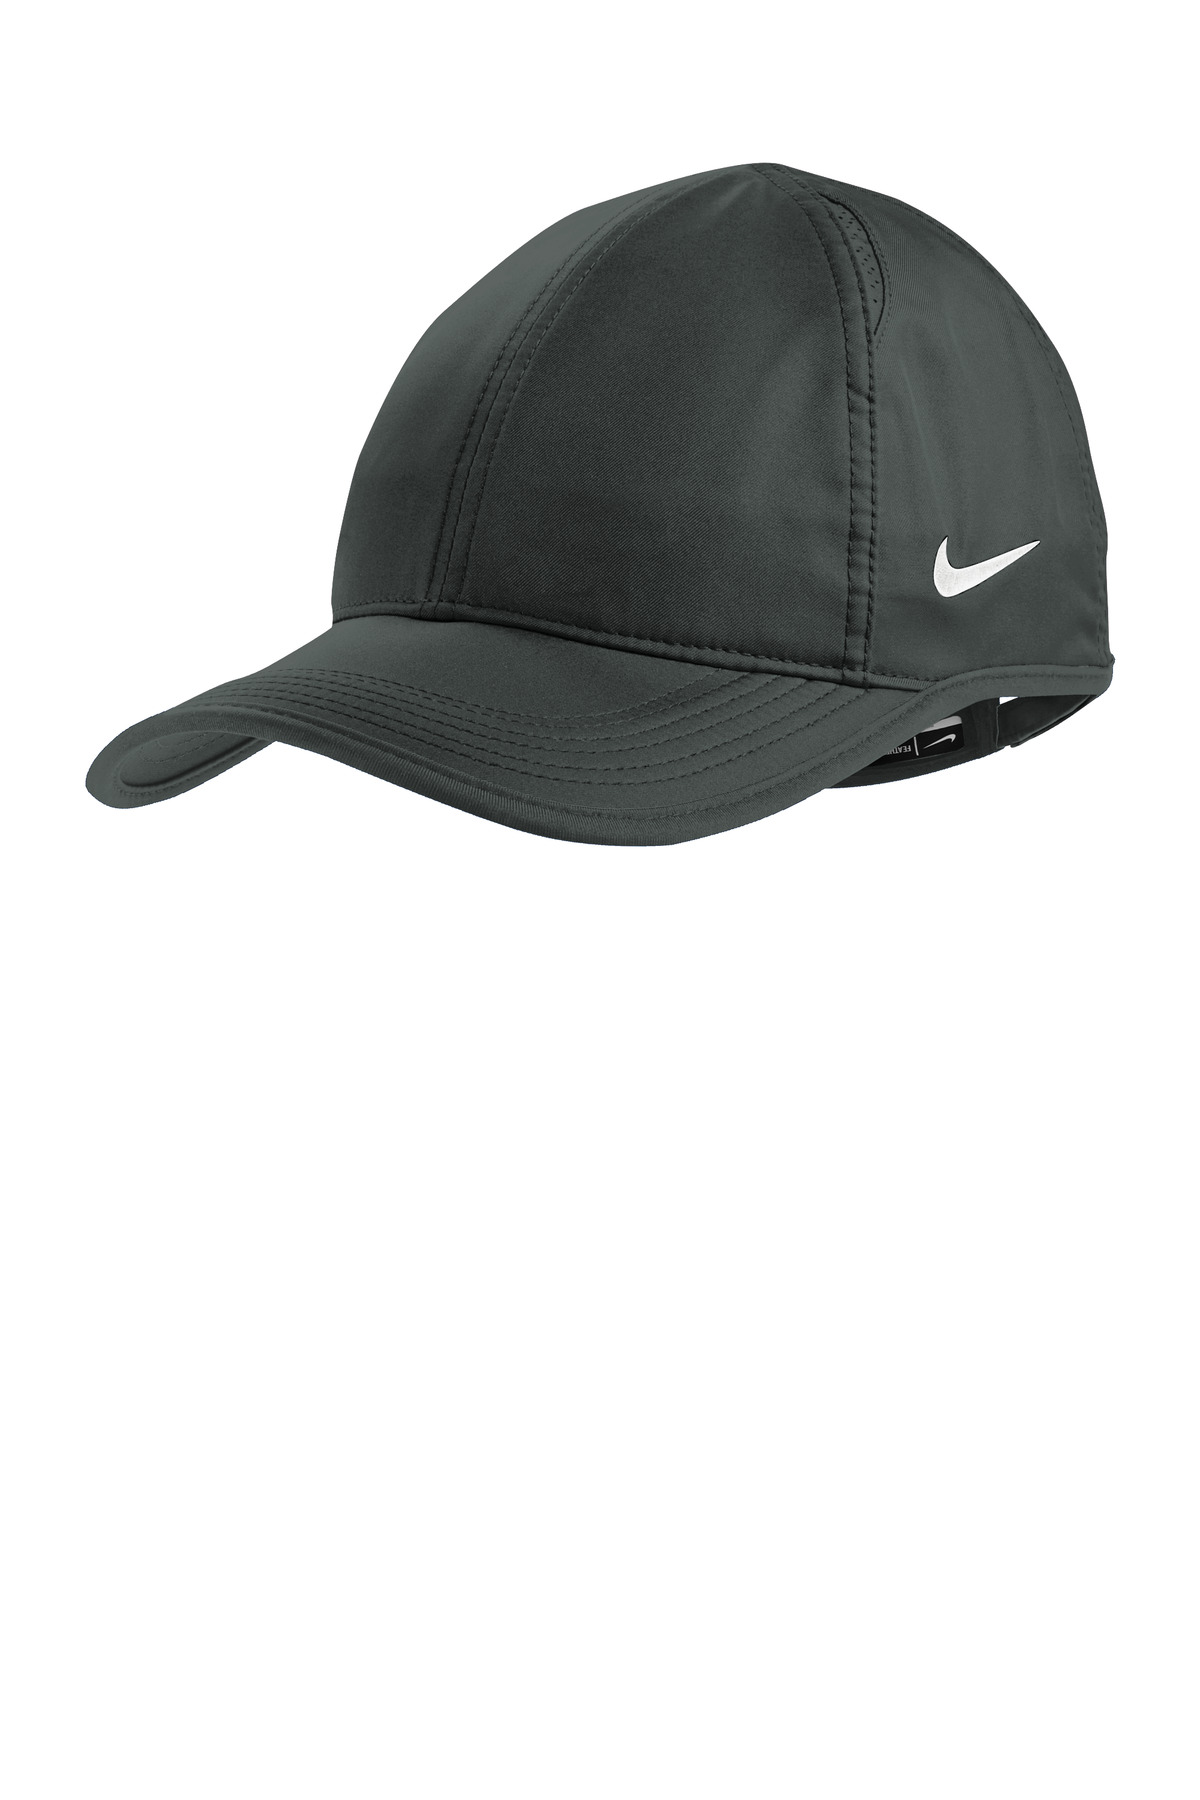 Nike Dri-FIT Featherlight Performance Cap-Nike